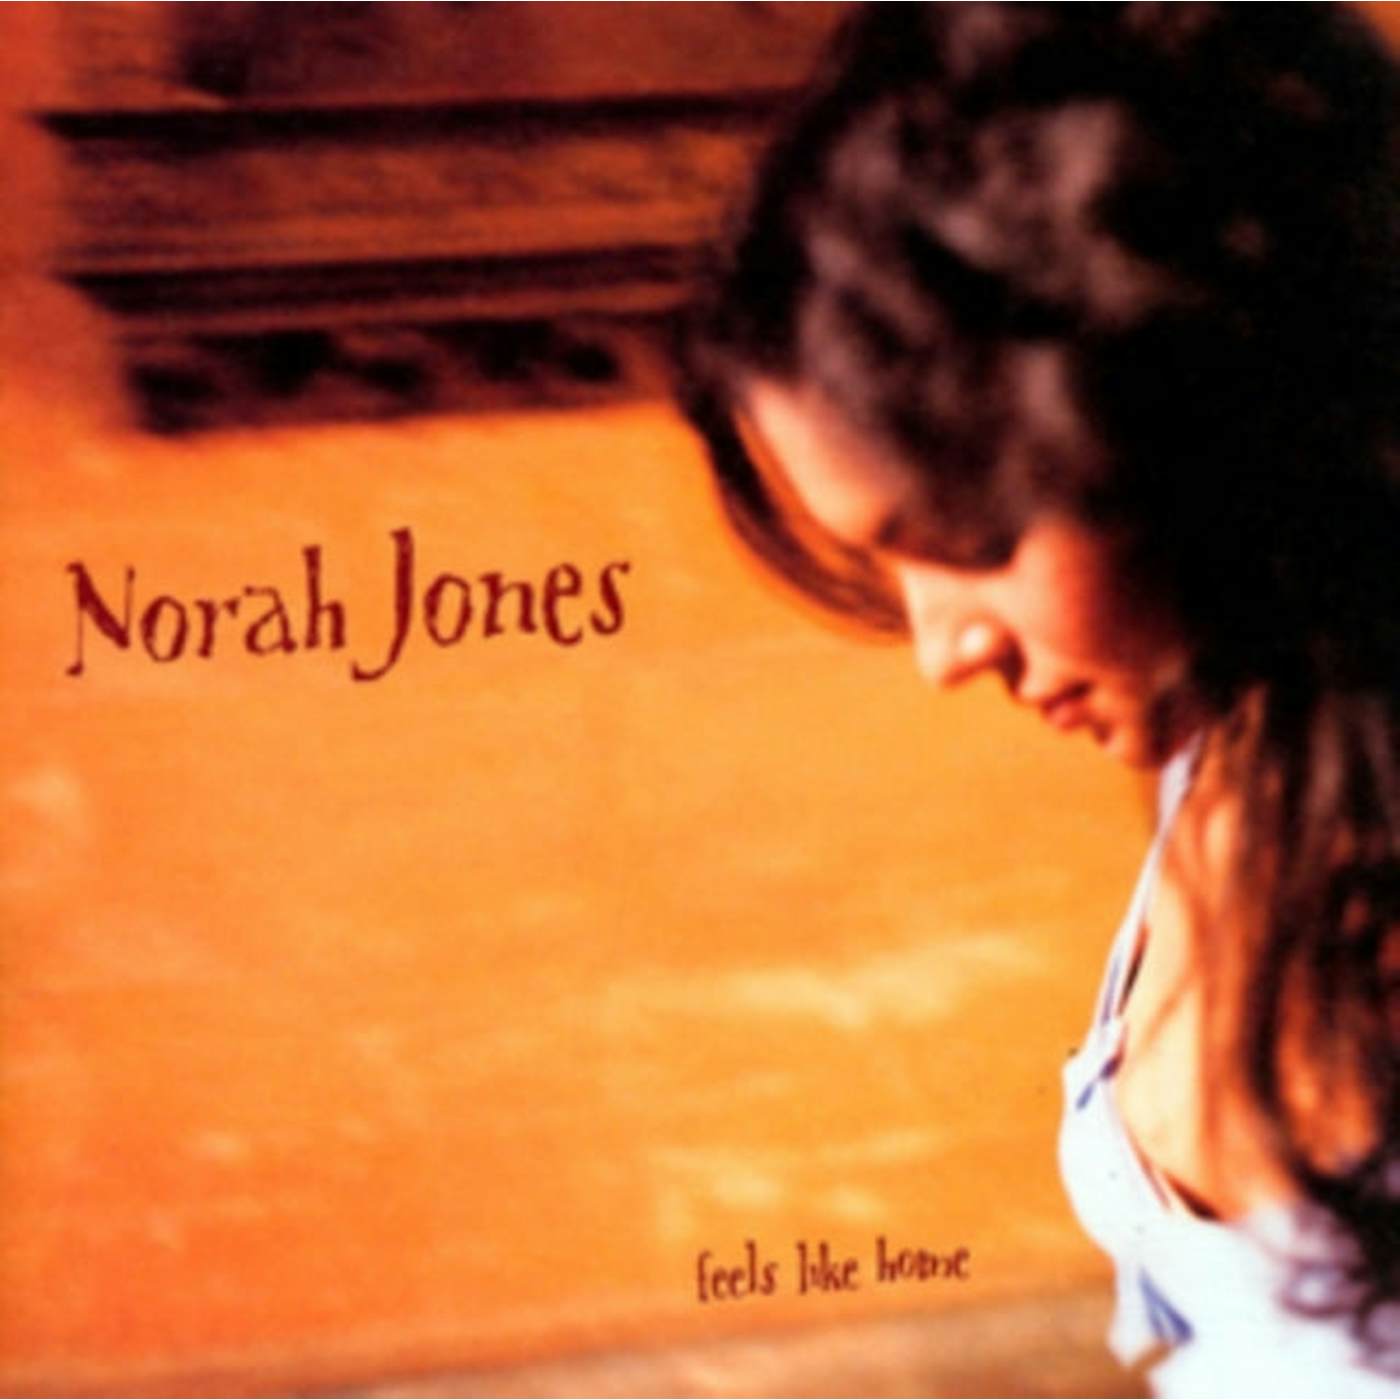 Norah Jones LP Vinyl Record - Feels Like Home